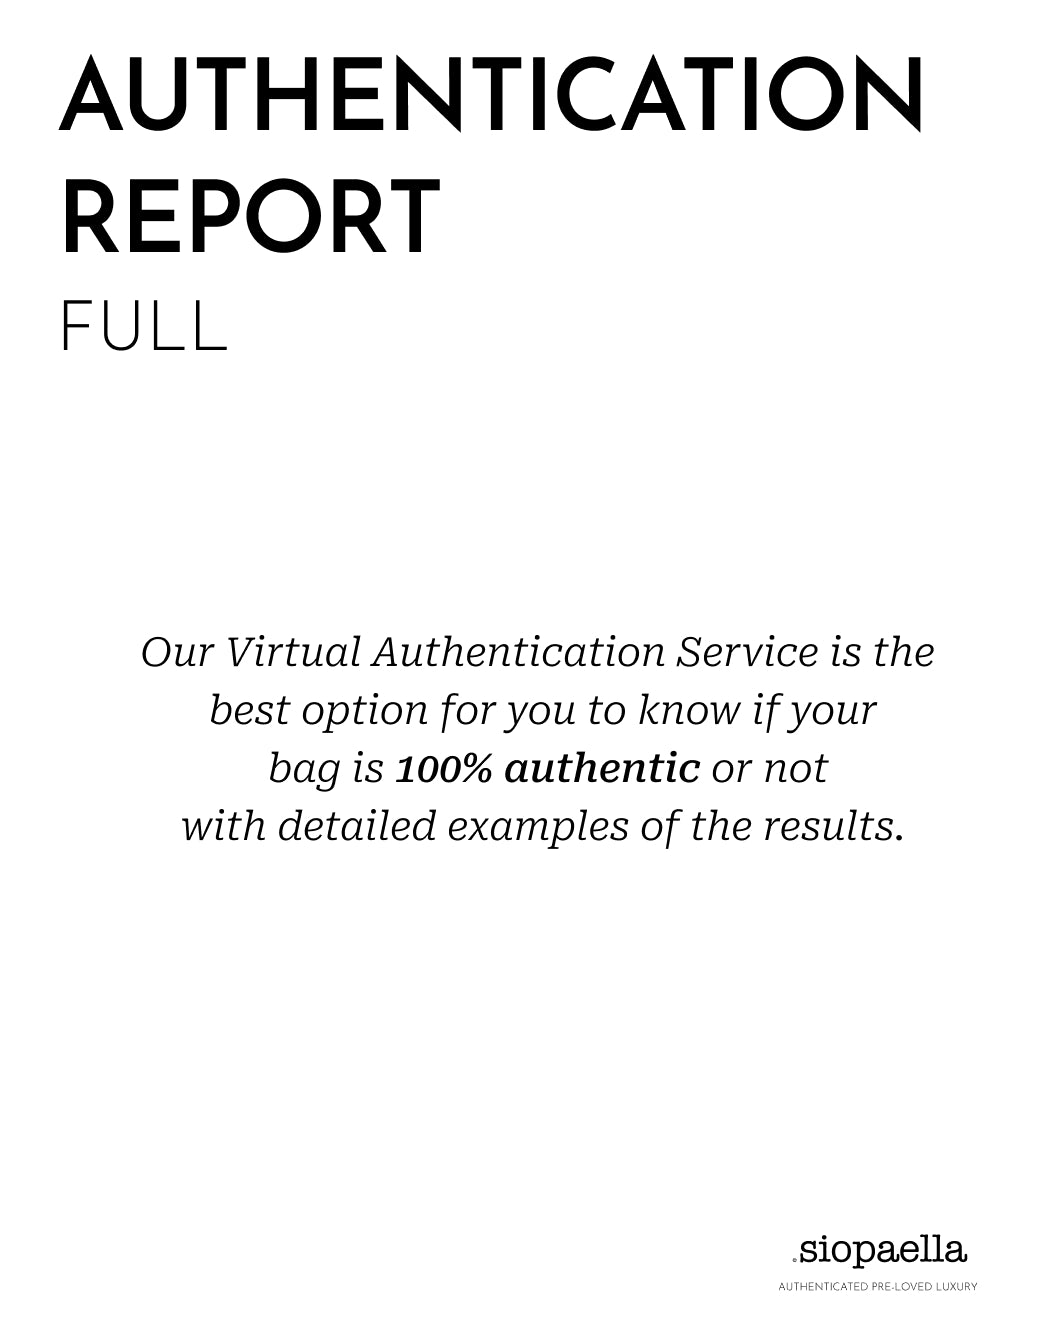 Authenticate This - Full Report